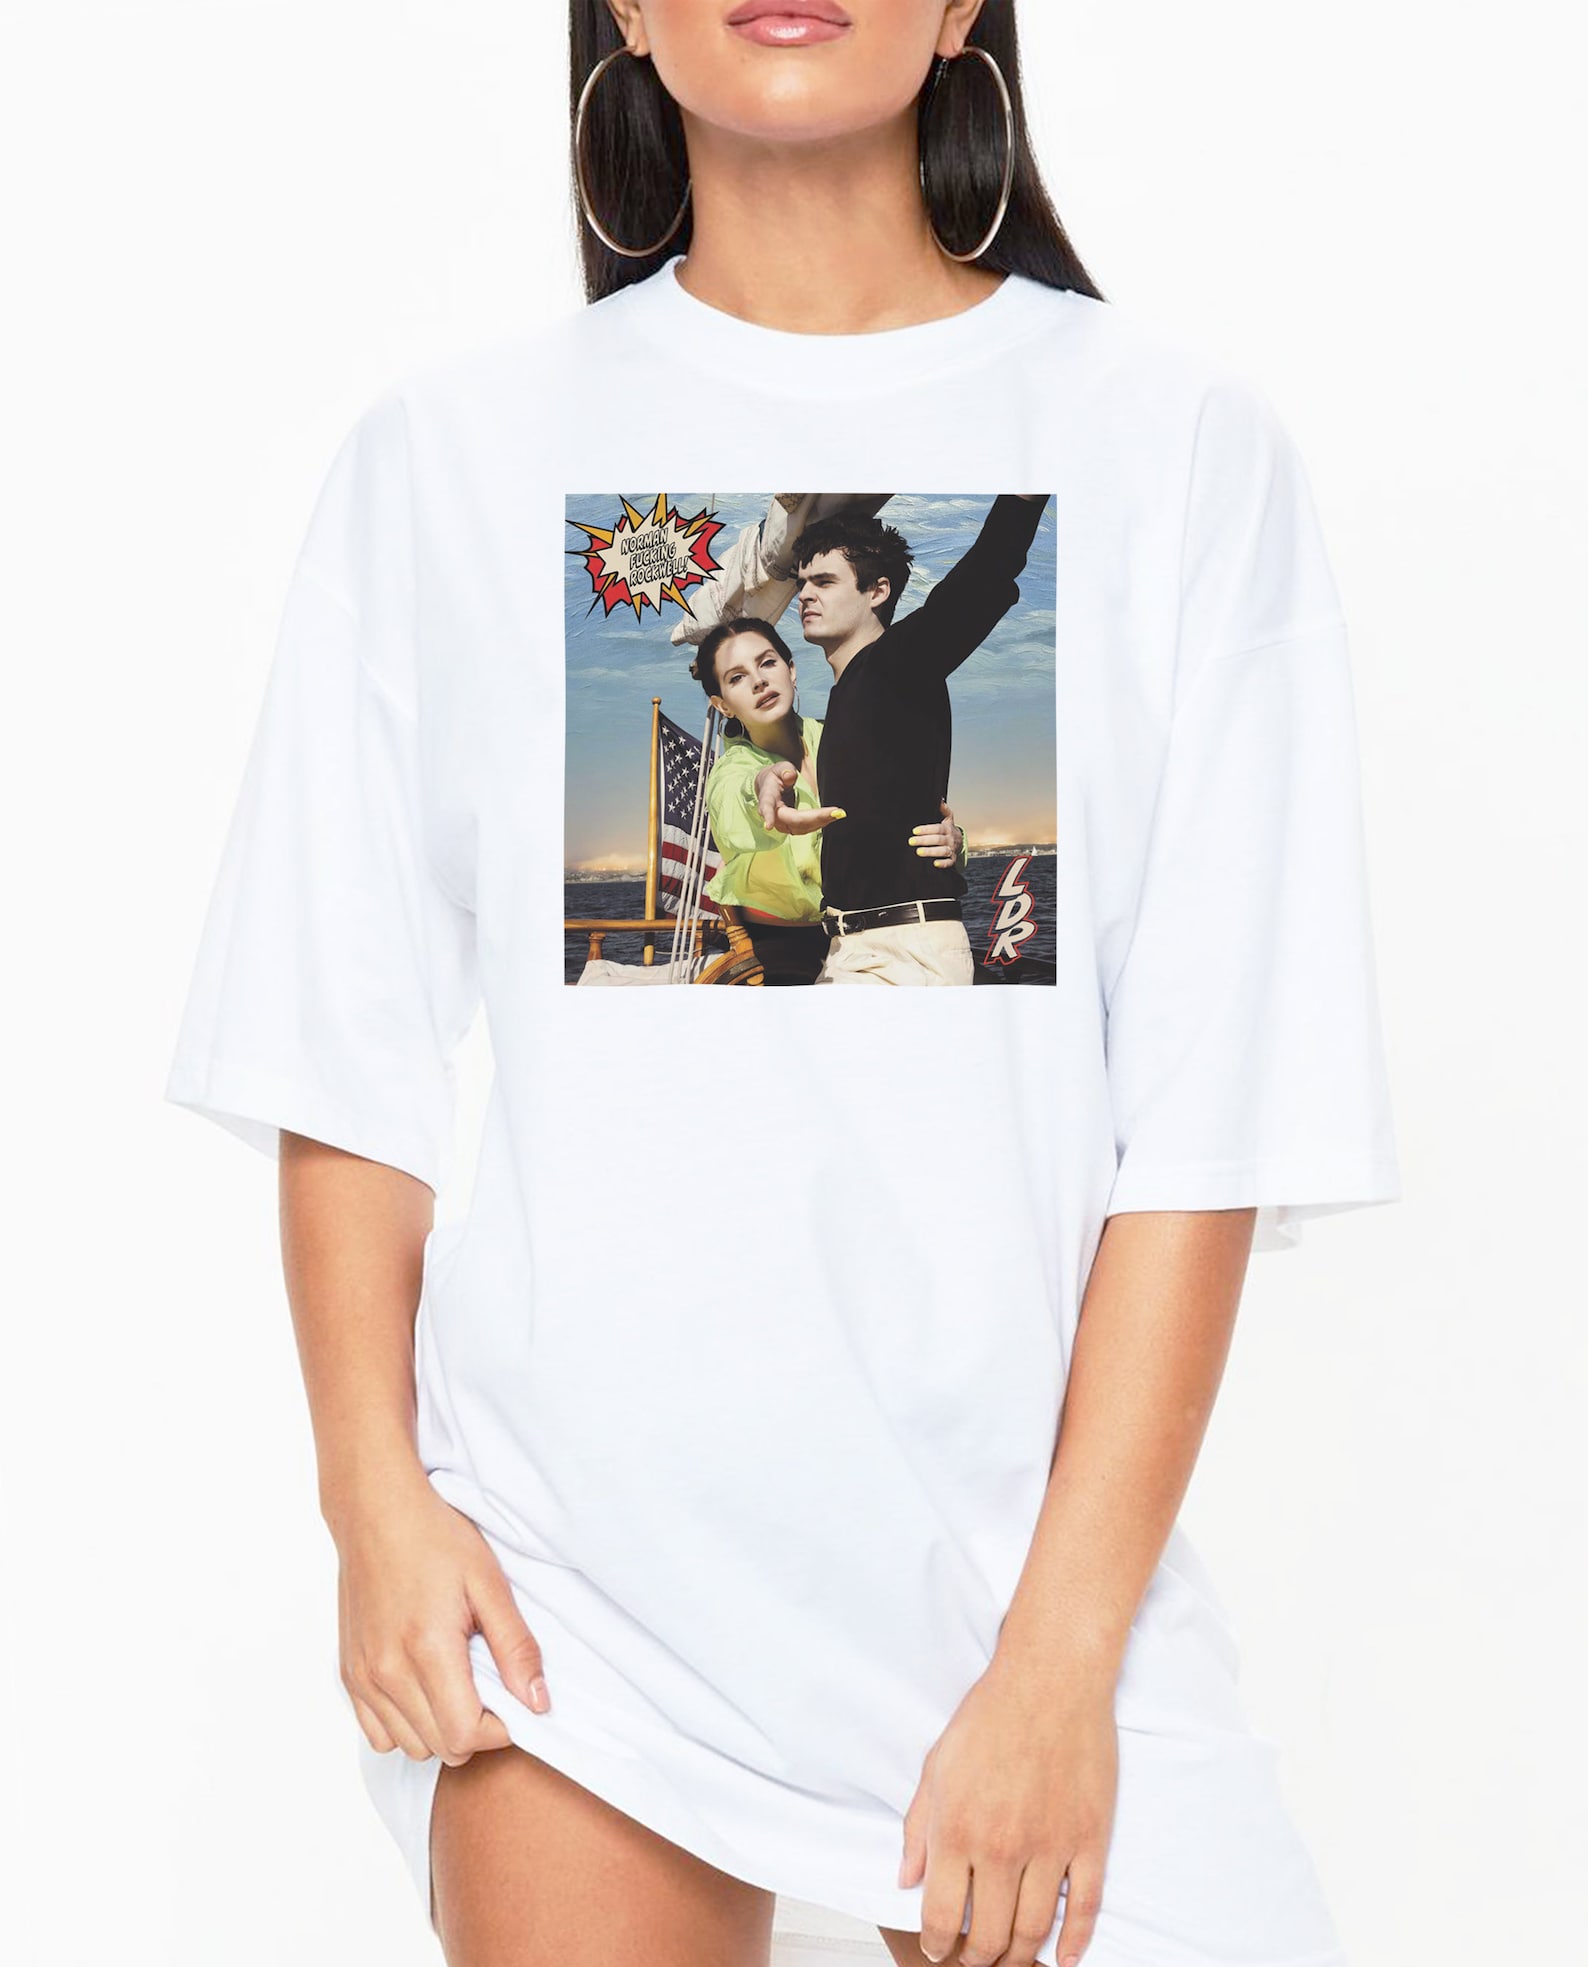 NFR Lana Del Rey OVERSIZED T shirt 100% Cotton Shirt Print Tee | Etsy